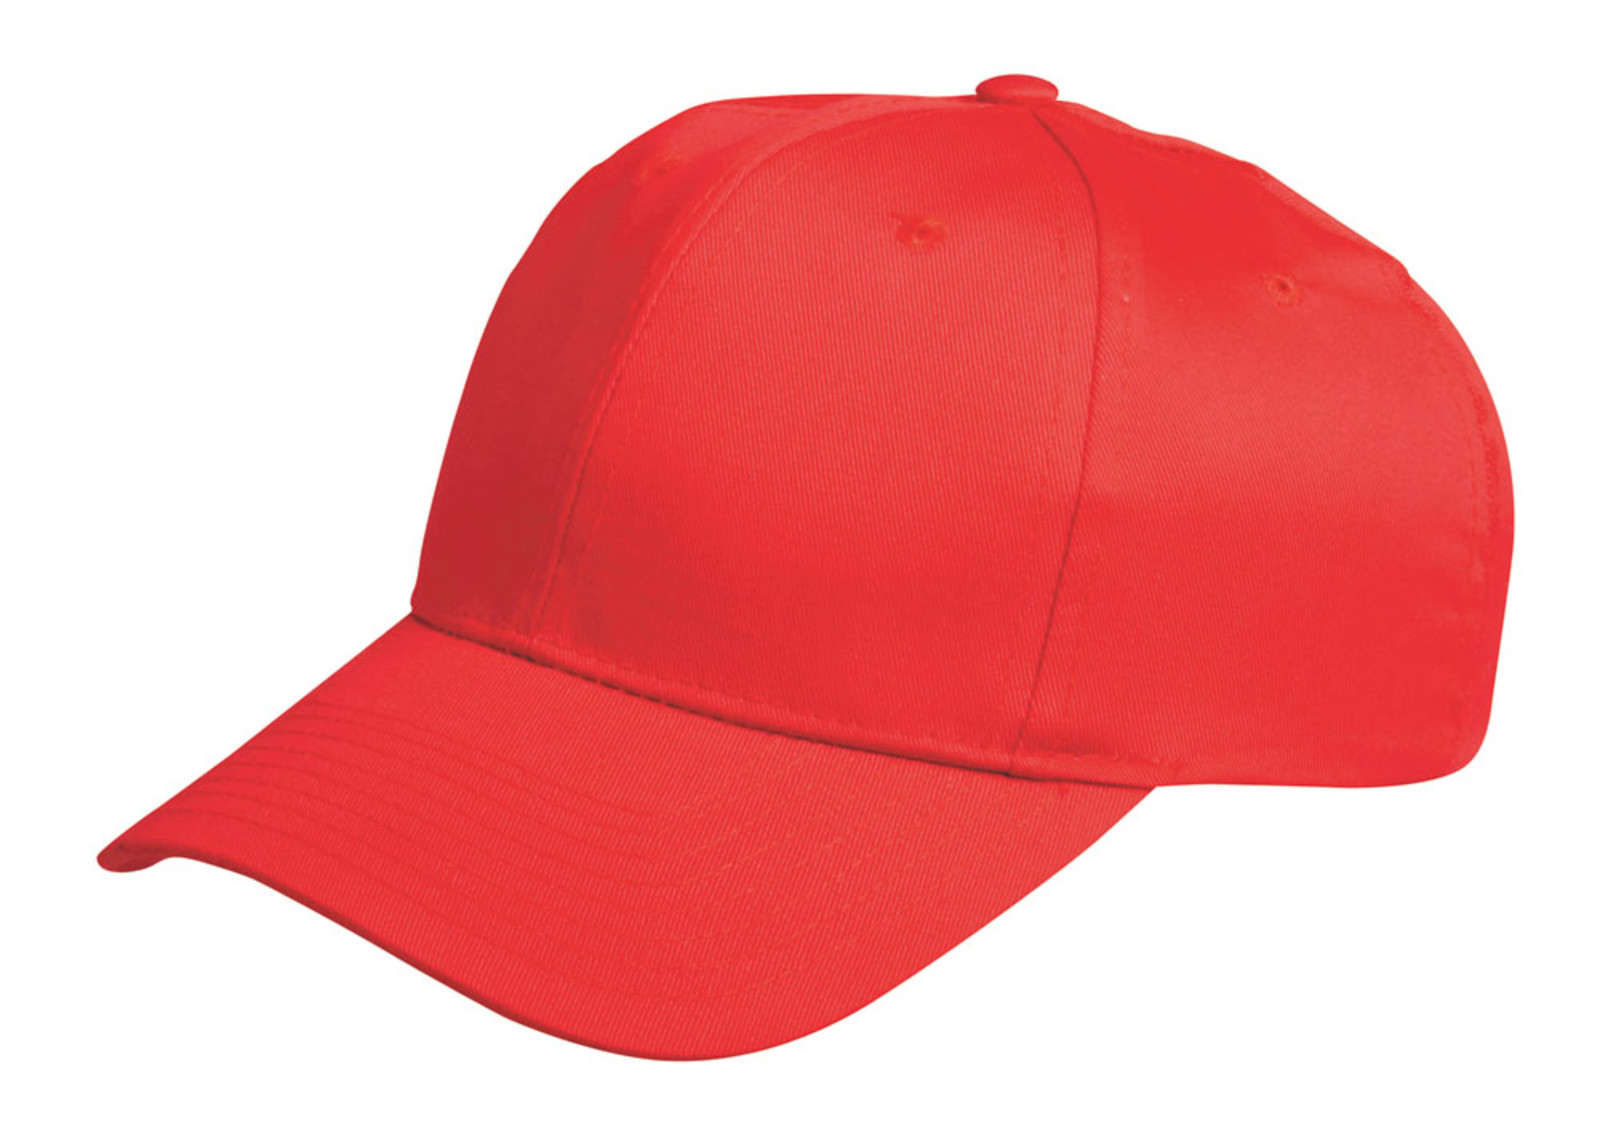 Bezpečnostná šiltovka Birrong s plastovou výstuhou - farba: červená